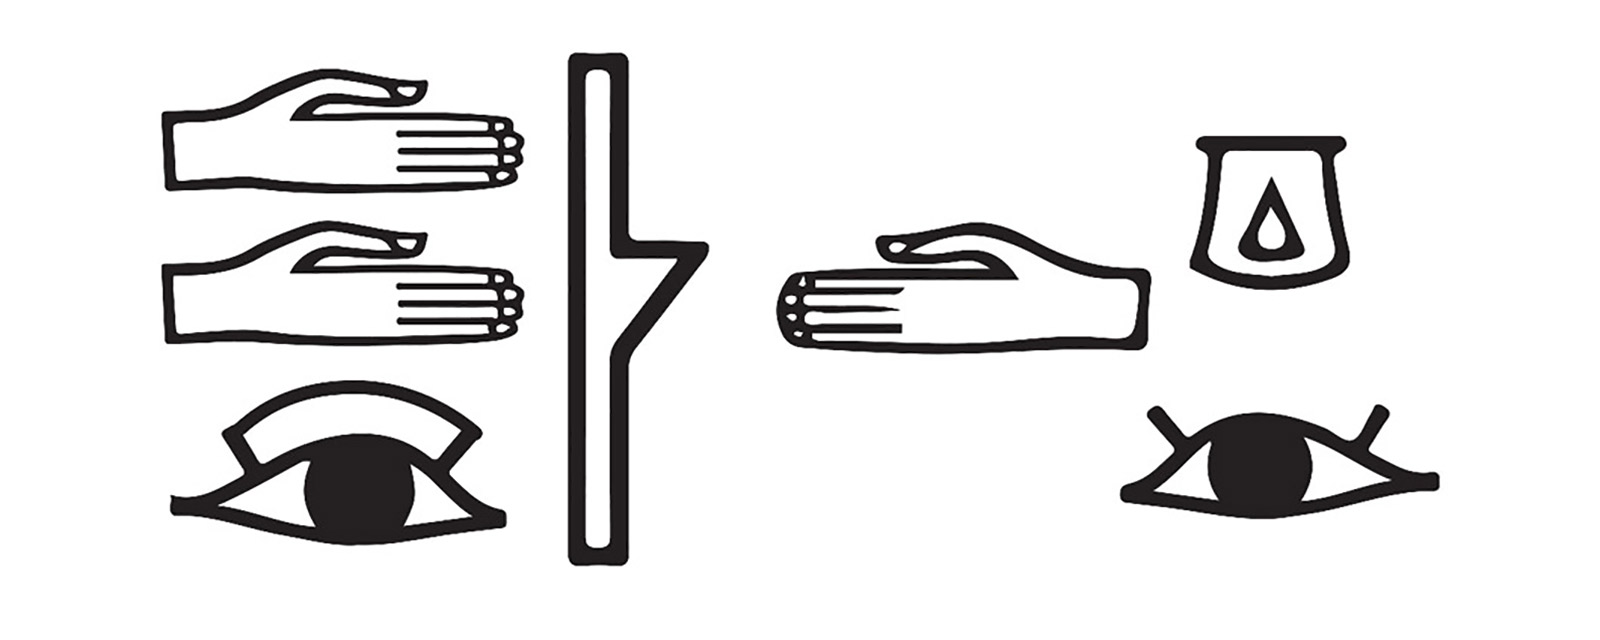 Hieroglyphs of hands, eyes, an a stick-like form.